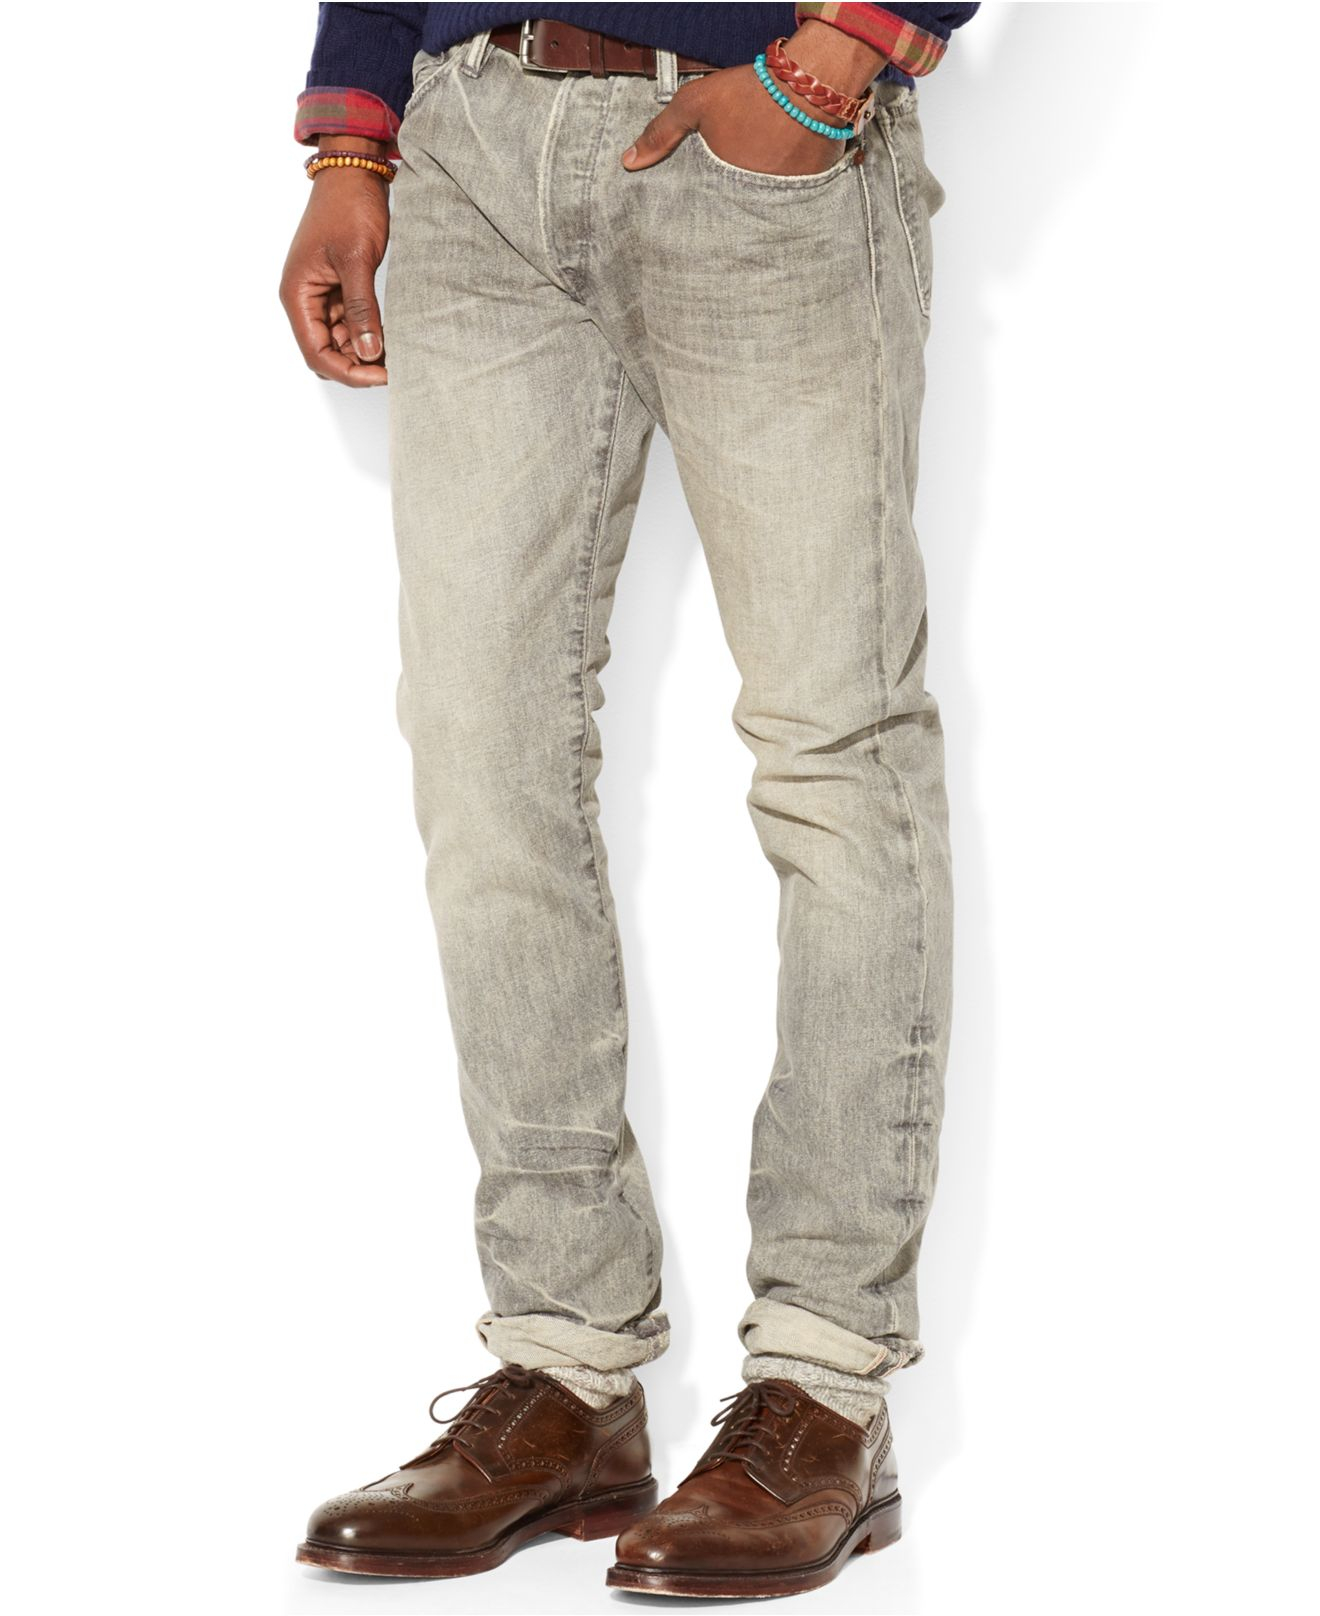 Lyst - Polo Ralph Lauren Slim-fit Varick Ash-grey Jeans in Gray for Men